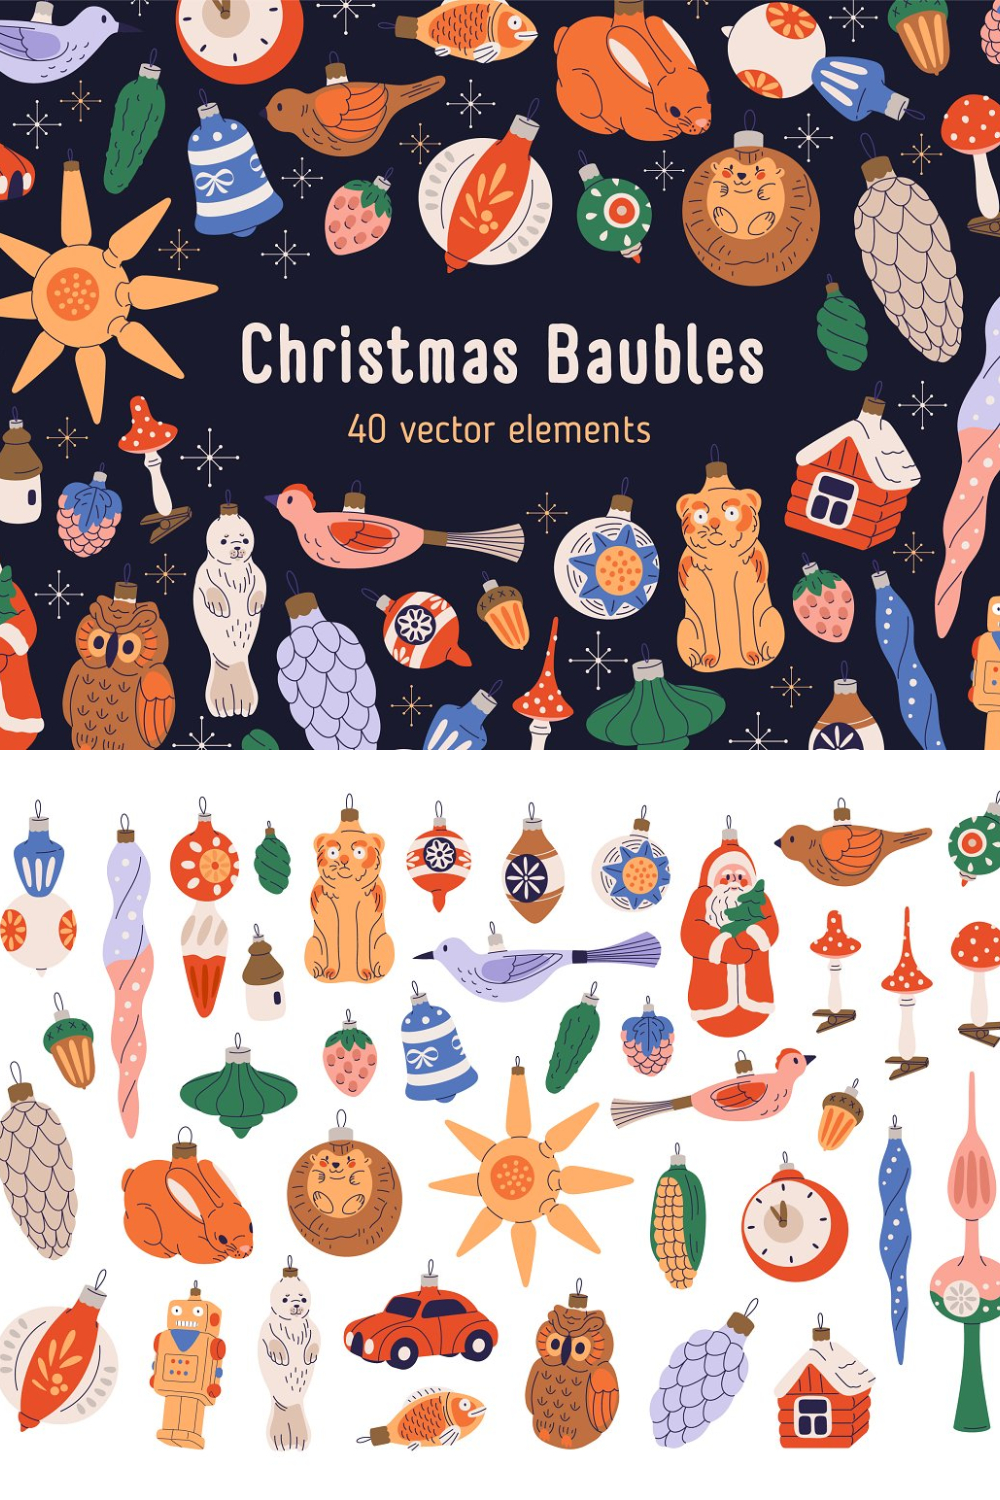 Vintage Christmas Baubles & Toys Set - Pinterest.